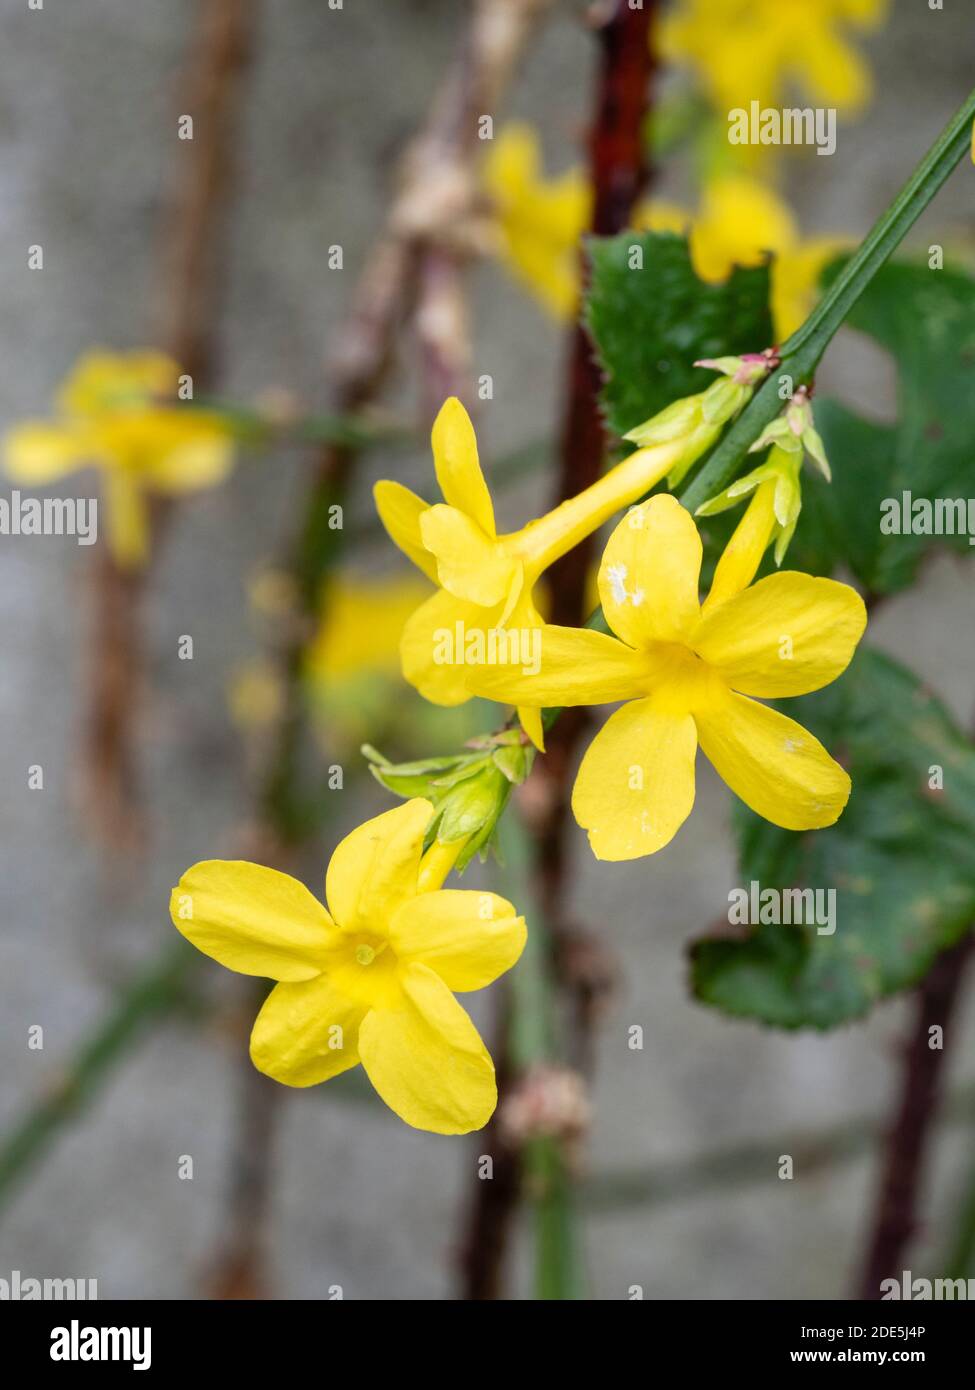 Yellow flowers of the late autumn to winter blooming winter jasmine, Jasminum nudiflorum Stock Photo